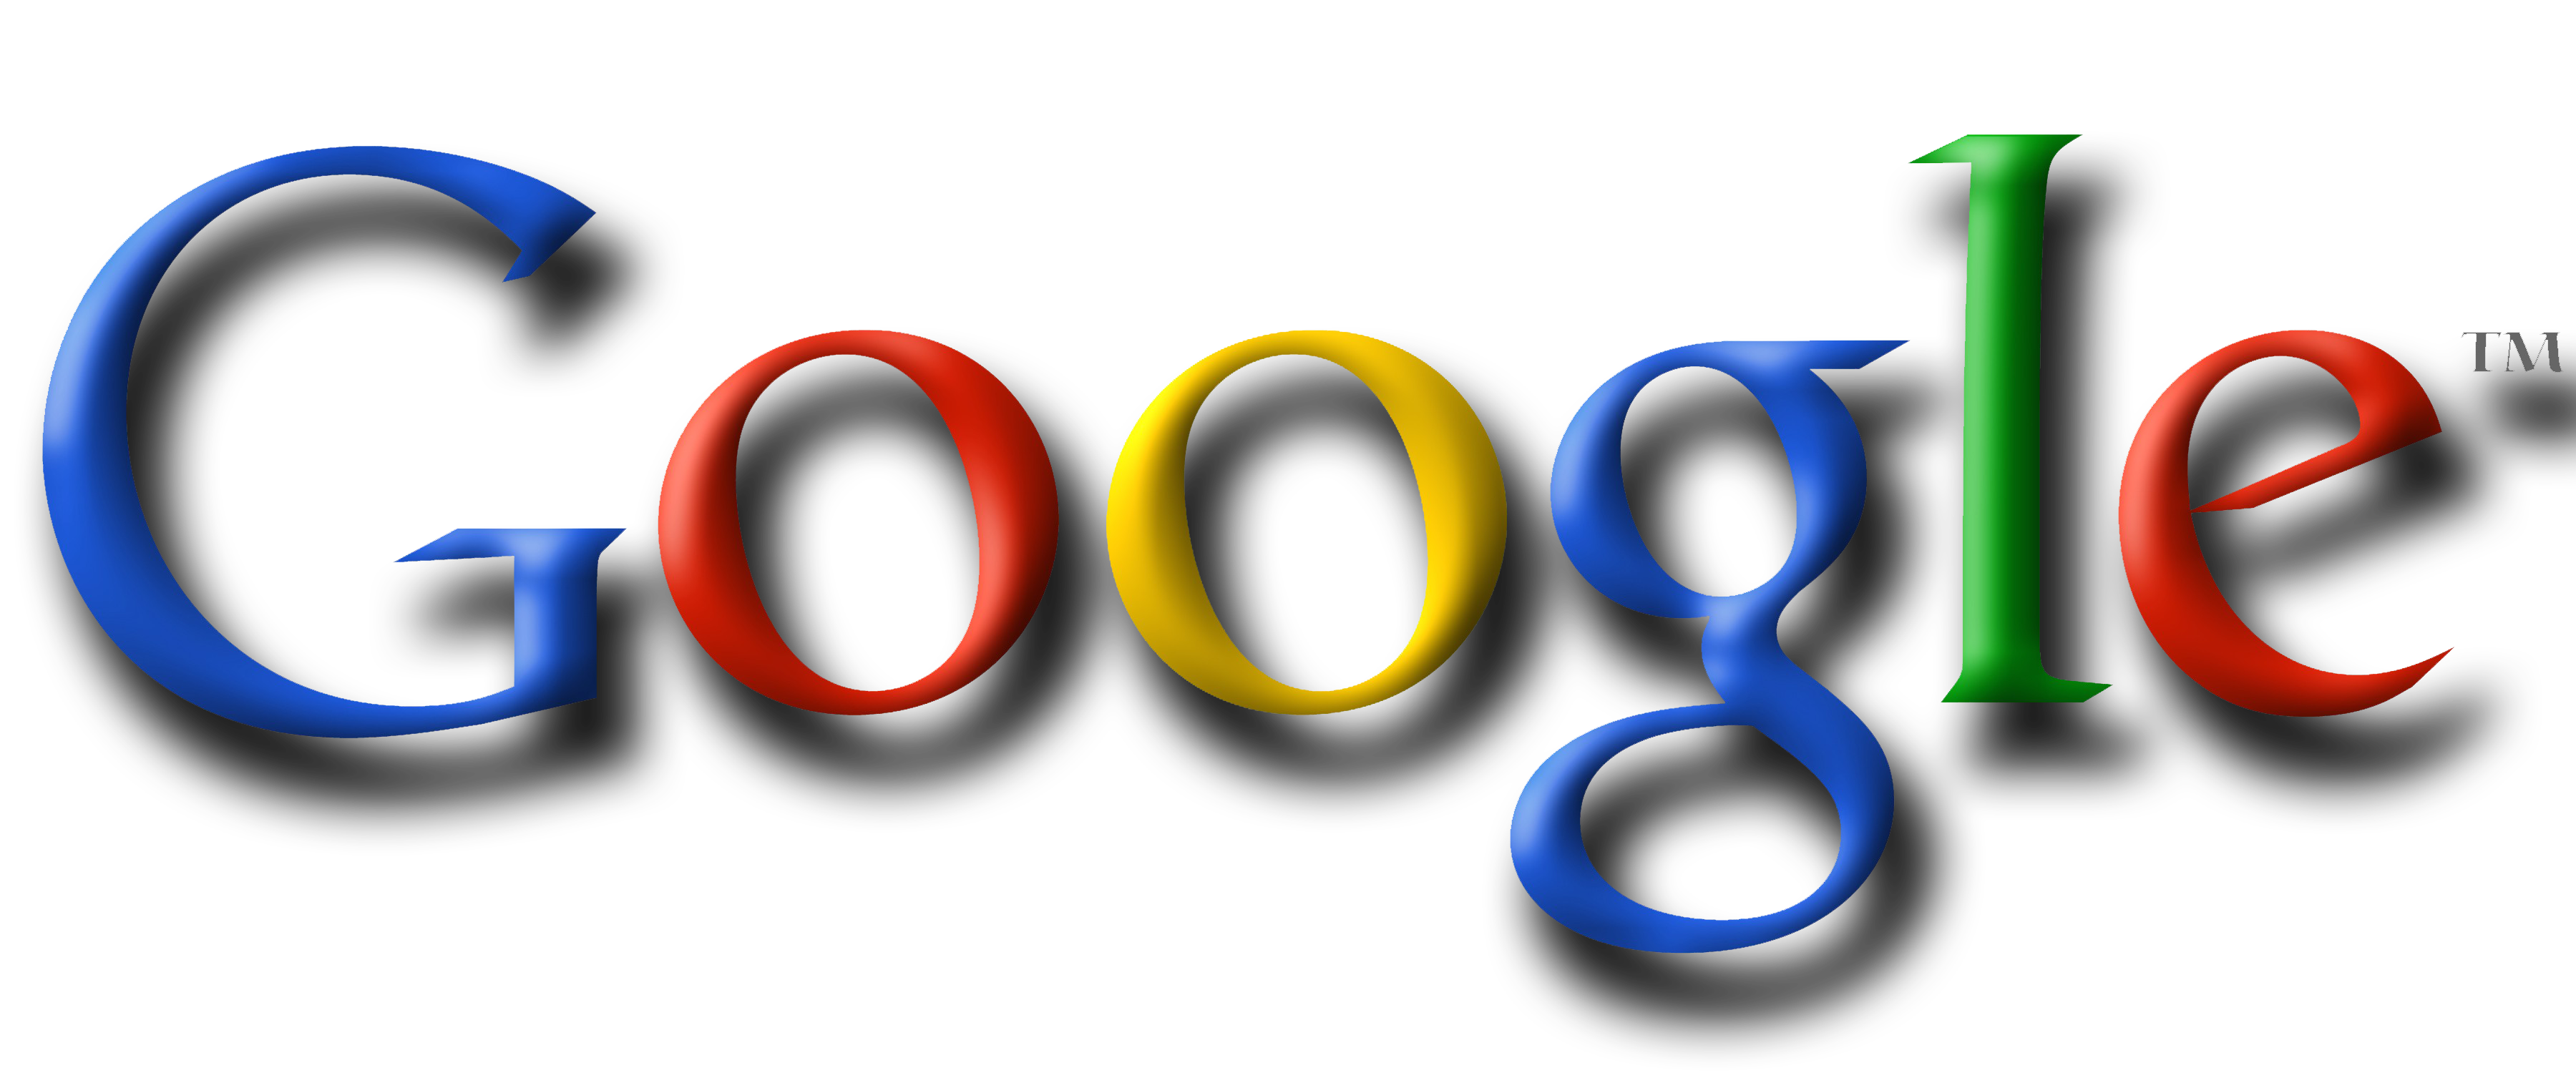 Google png. Logo images free download